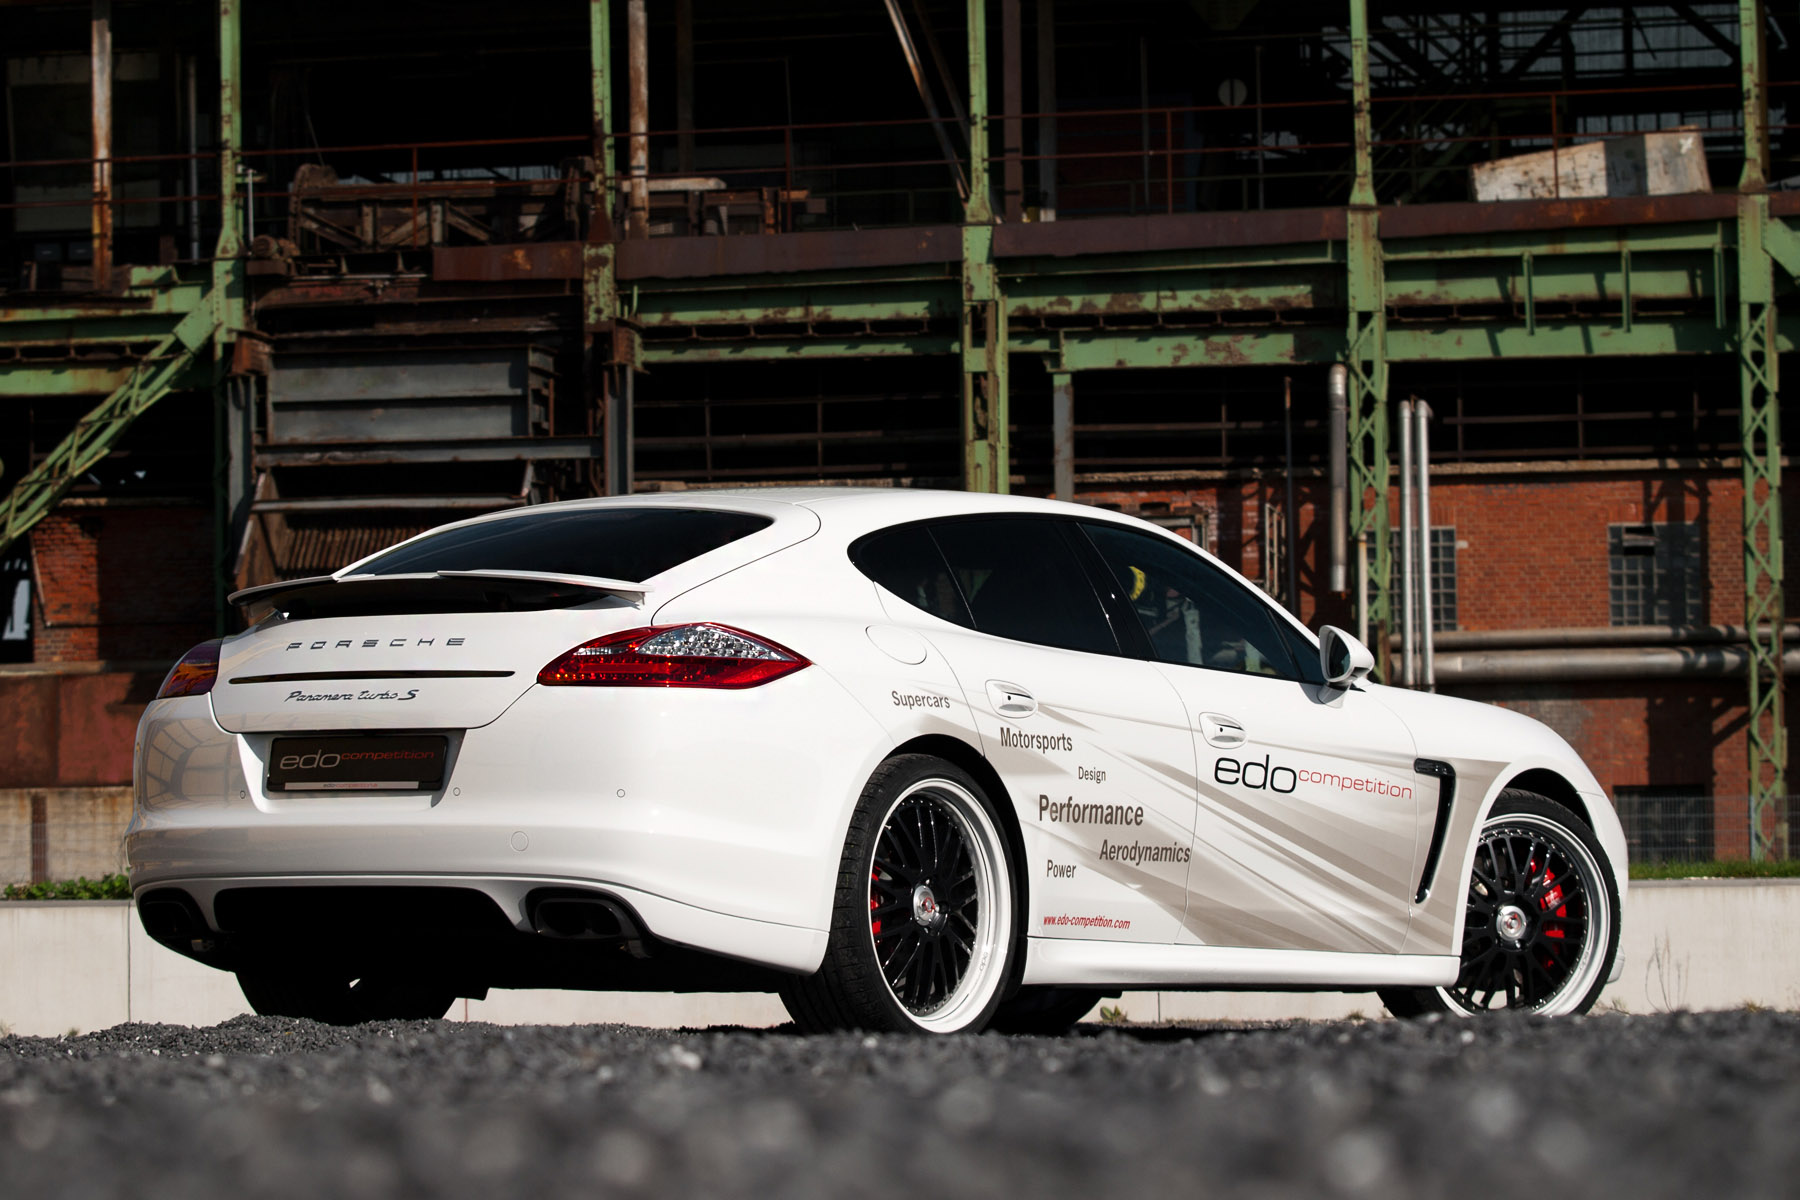 2012, Edo competition, Porsche, Panamera, Turbo s, Turbo, Tuning Wallpaper